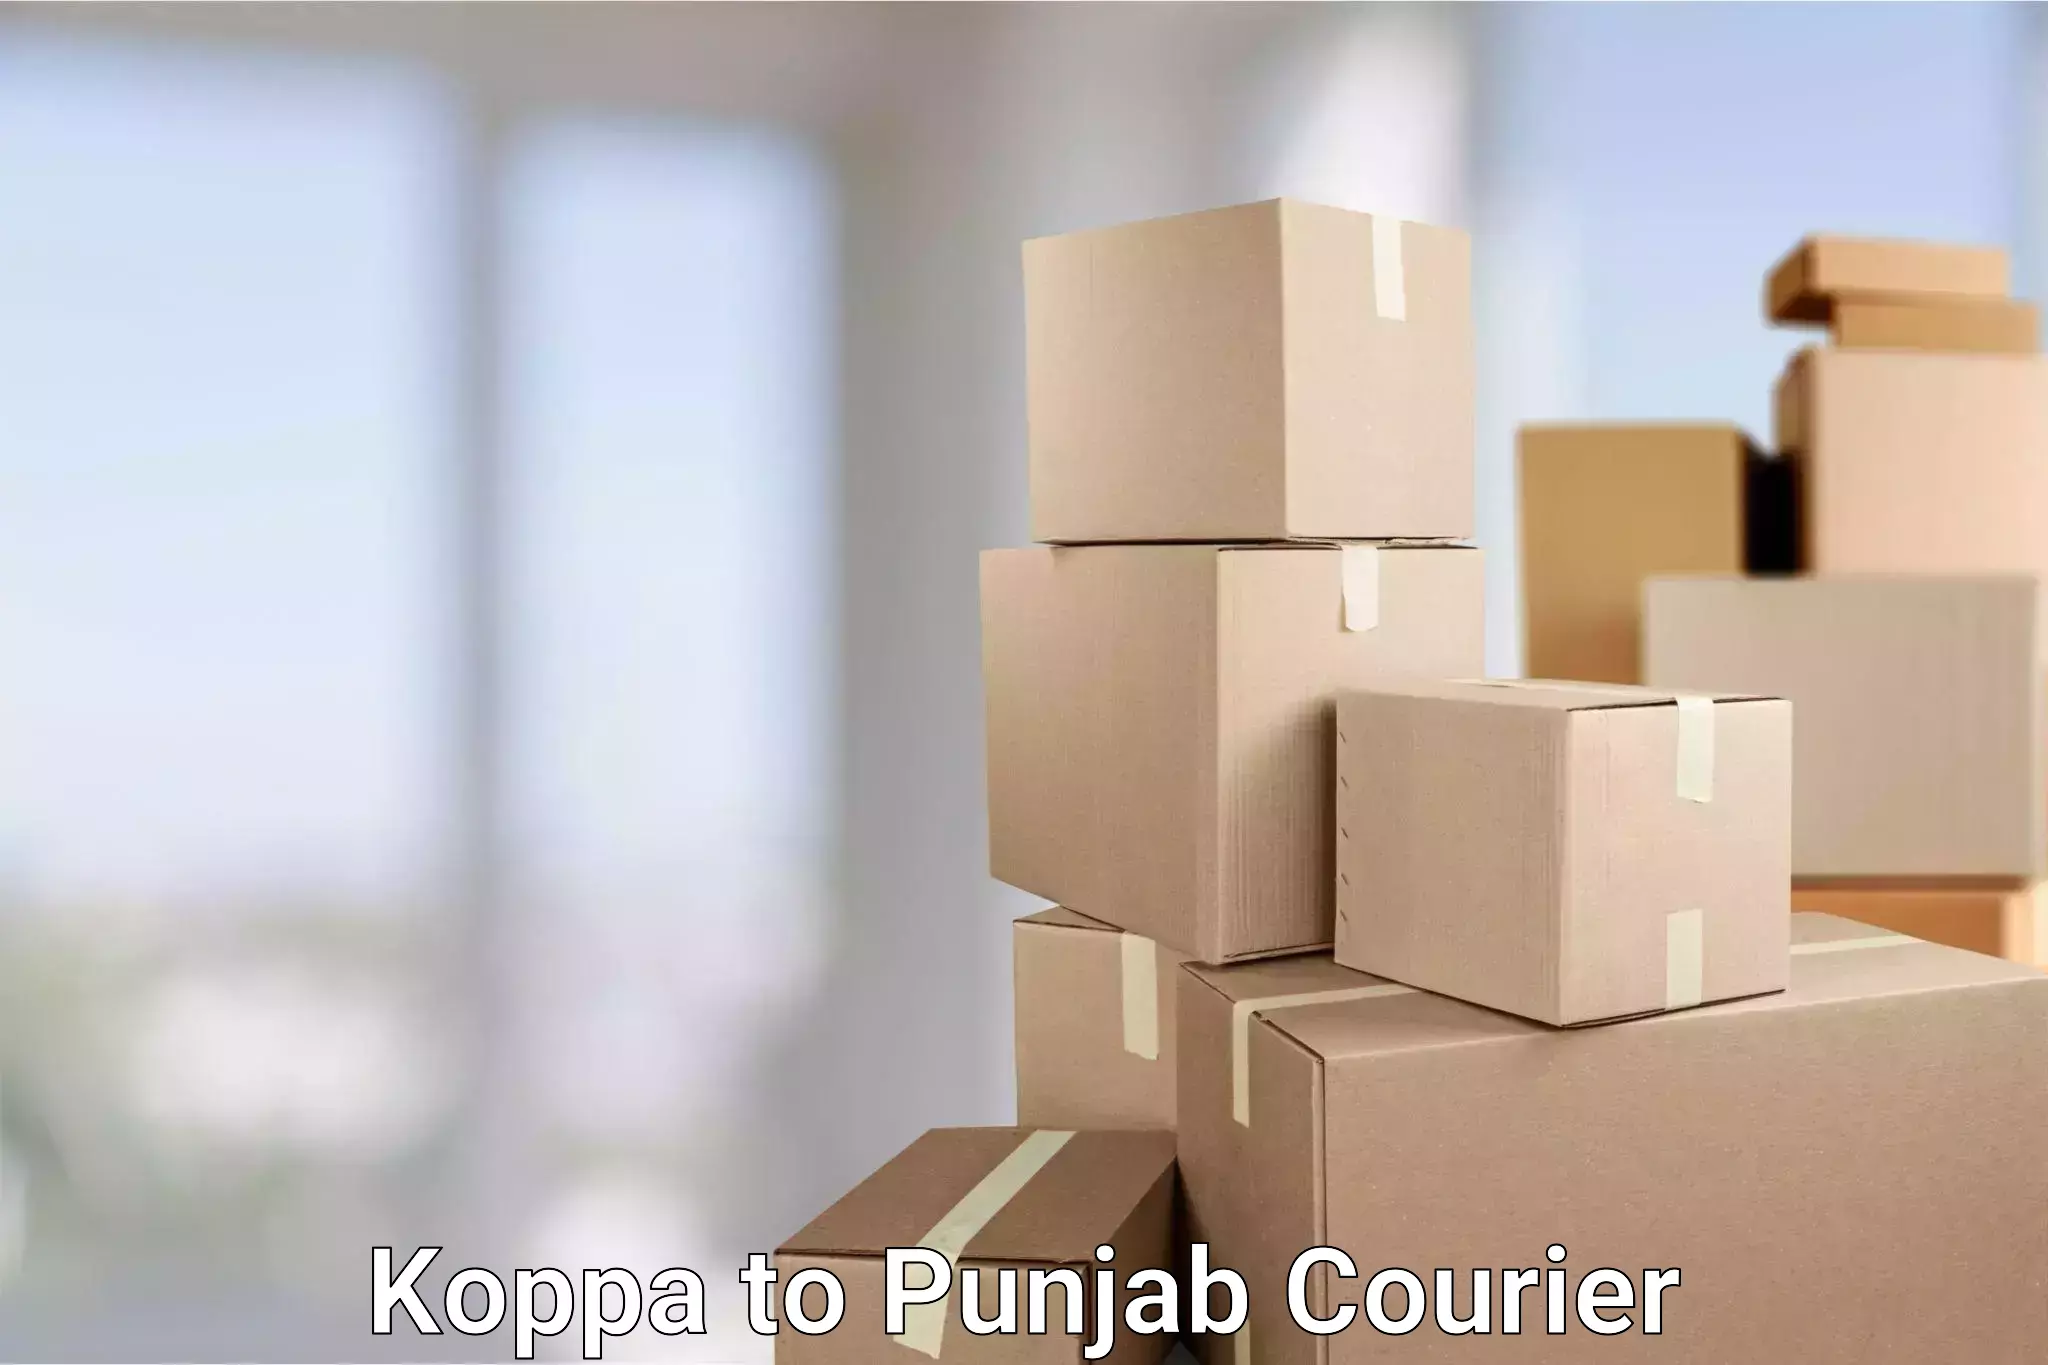 Full-service courier options Koppa to Talwara